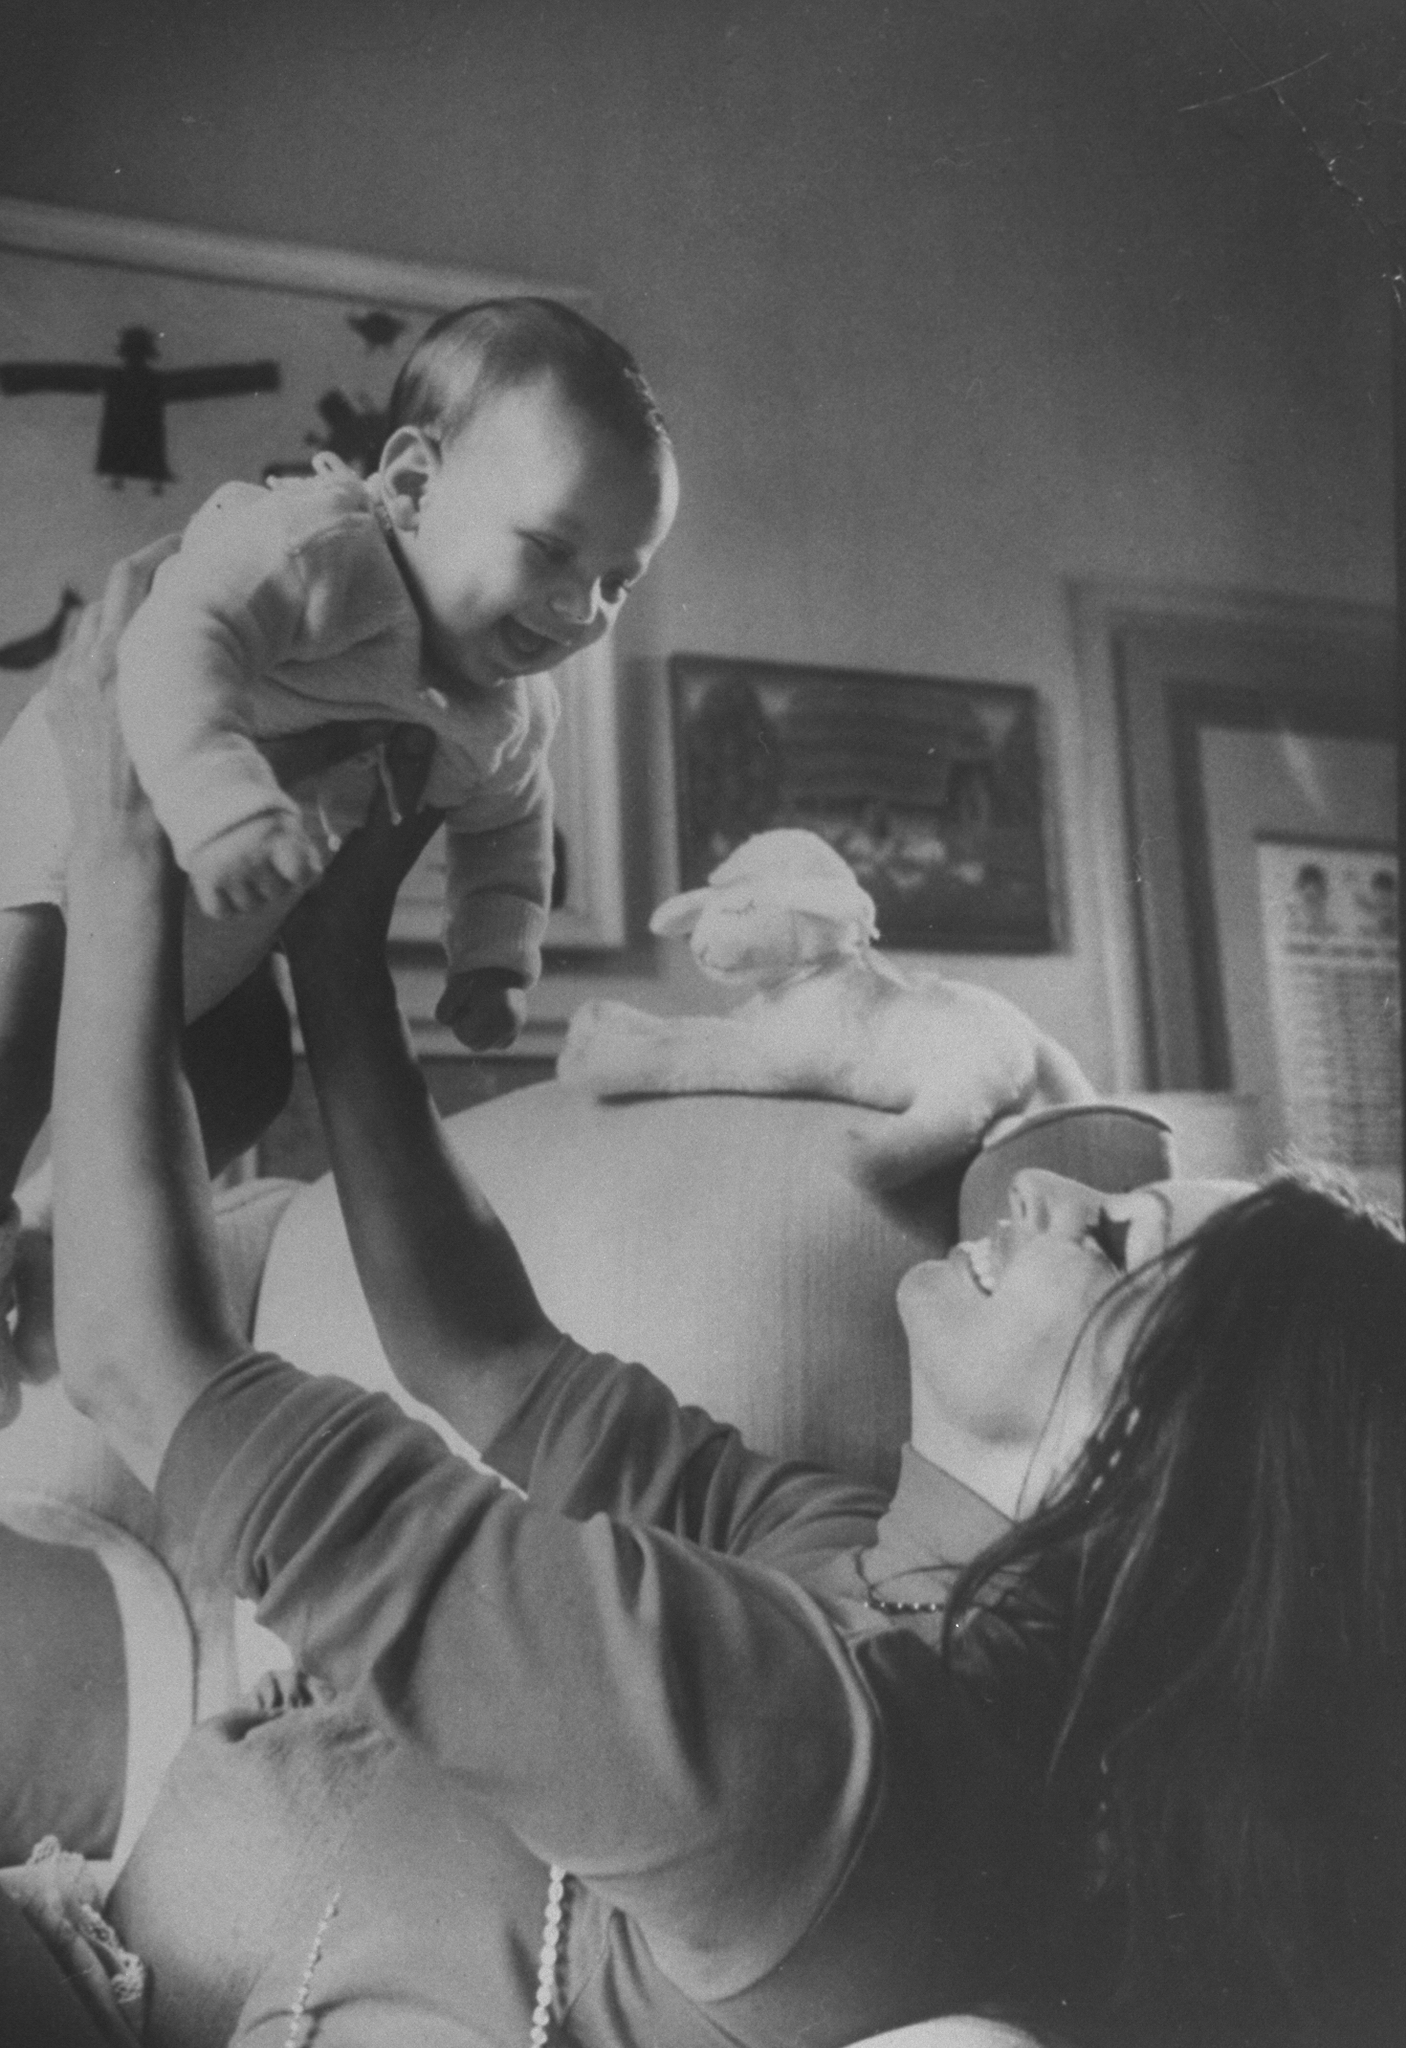 Sophia Loren lifts son Carlo Ponti Jr. in air at home in Rome in 1969